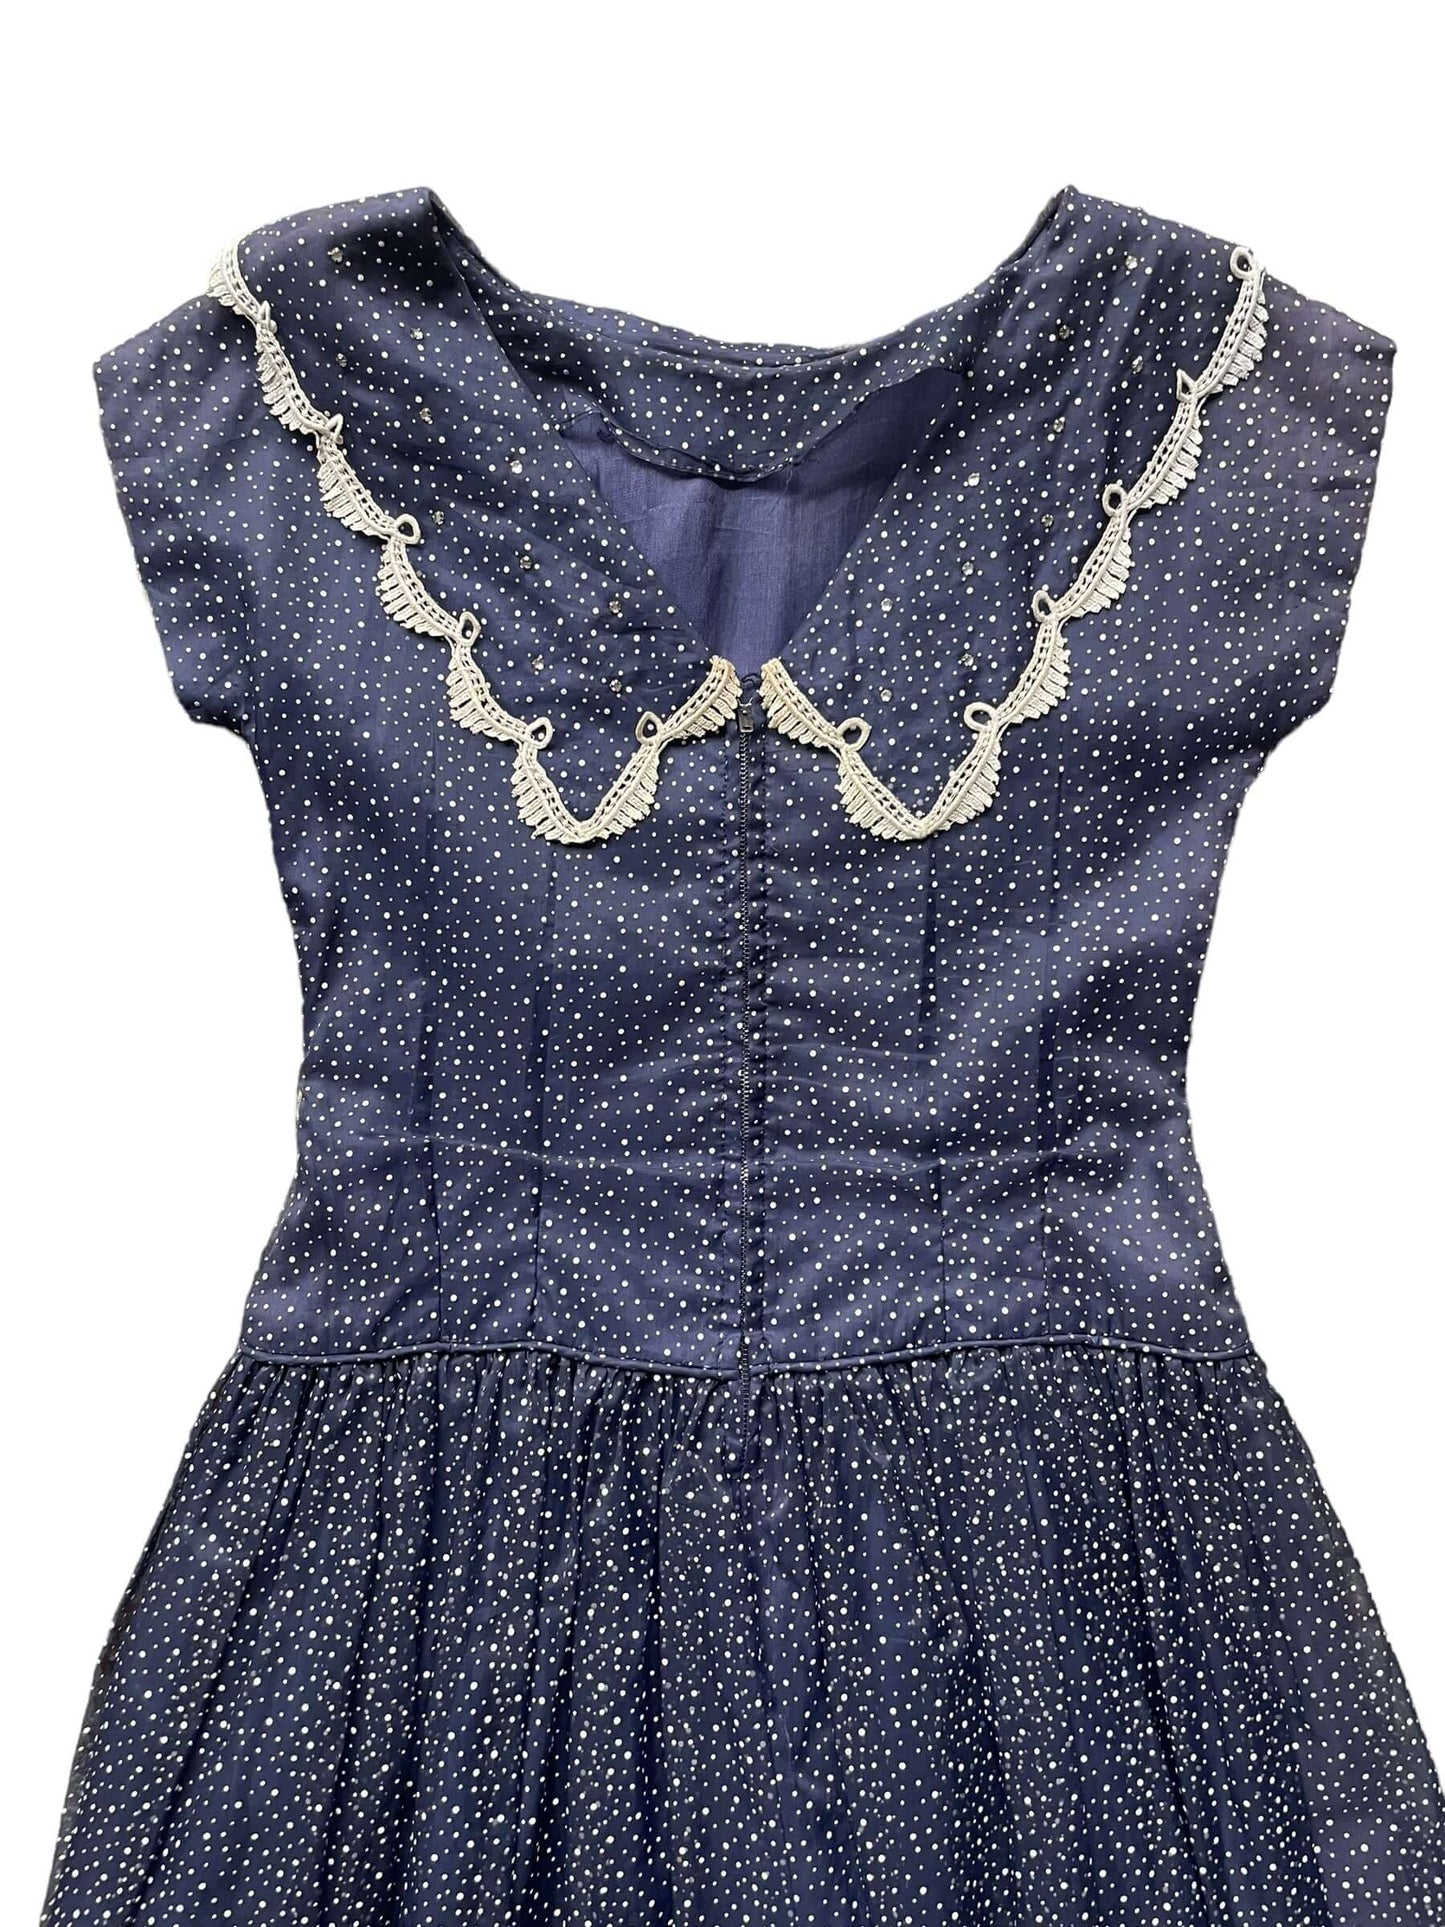 Upper back view of Vintage 1940s Navy Blue Swiss Dot Dress |  Barn Owl Vintage Dresses | Seattle Vintage Ladies Clothing